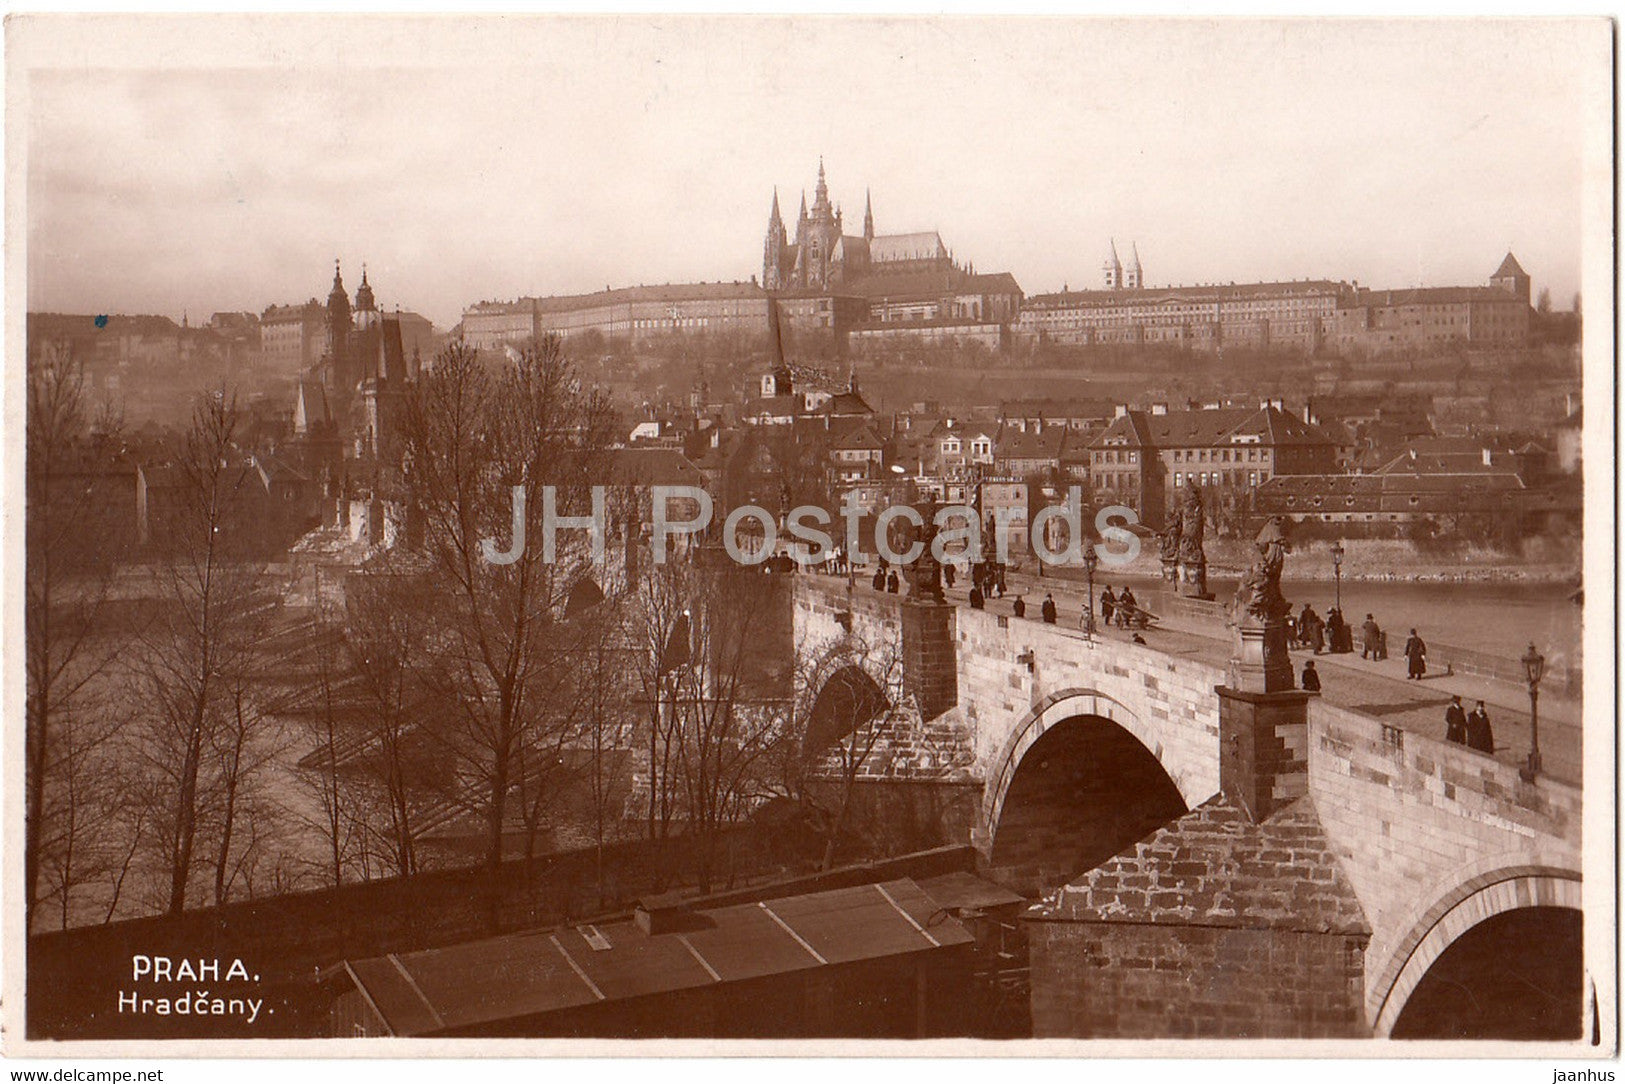 Praha - Prague - Hradcany - VKKV - old postcard - Czech Republic - unused - JH Postcards